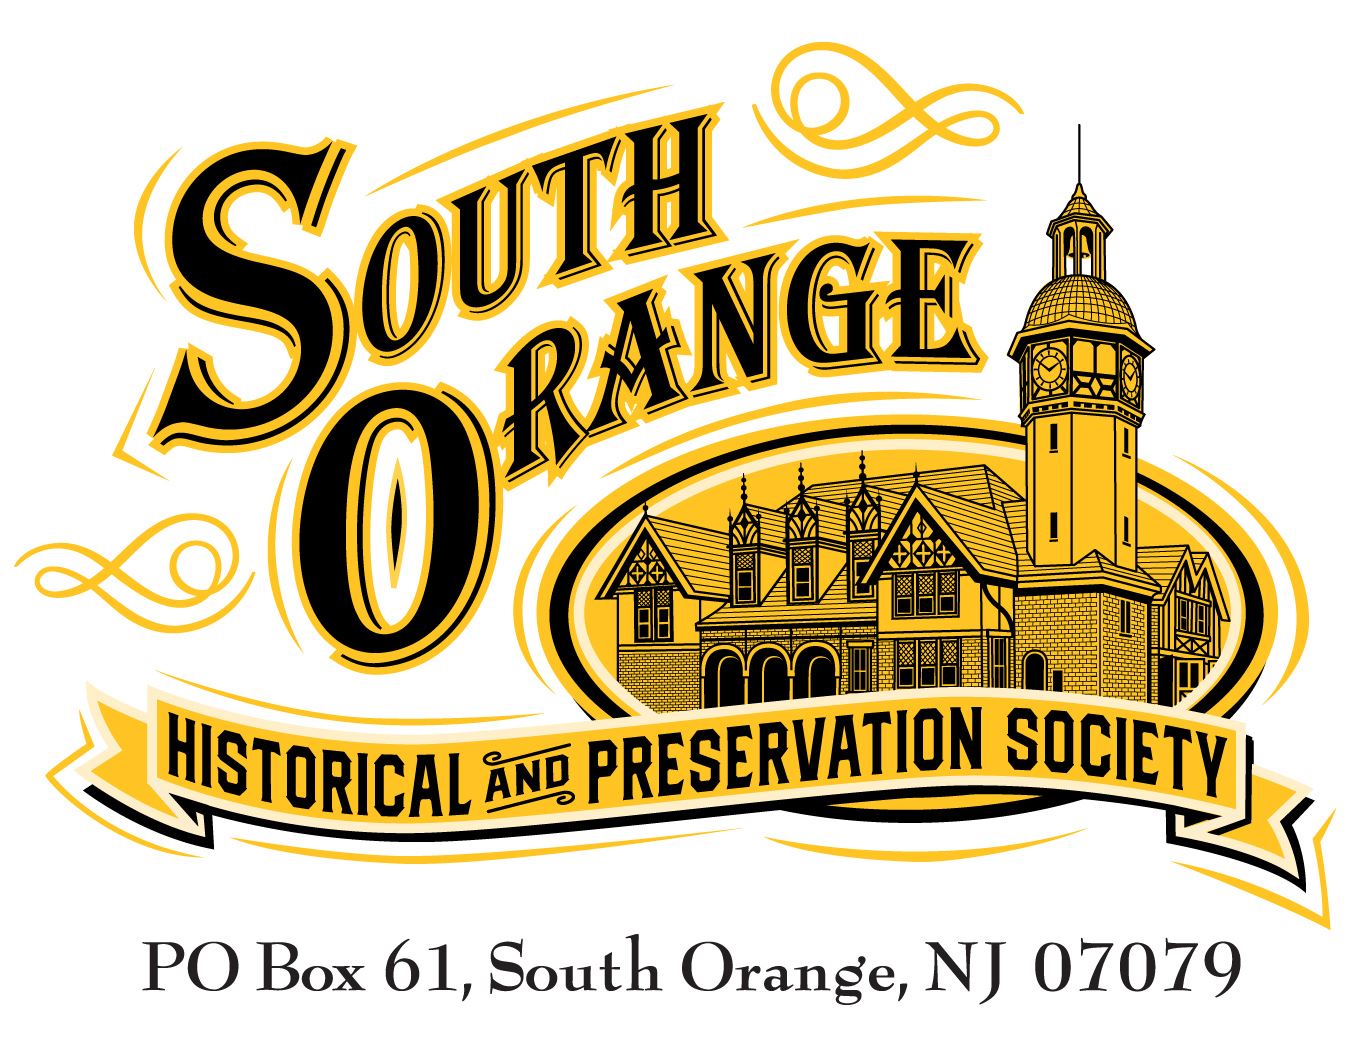 SOUTH ORANGE HISTORICAL & PRESERVATION SOCIETY